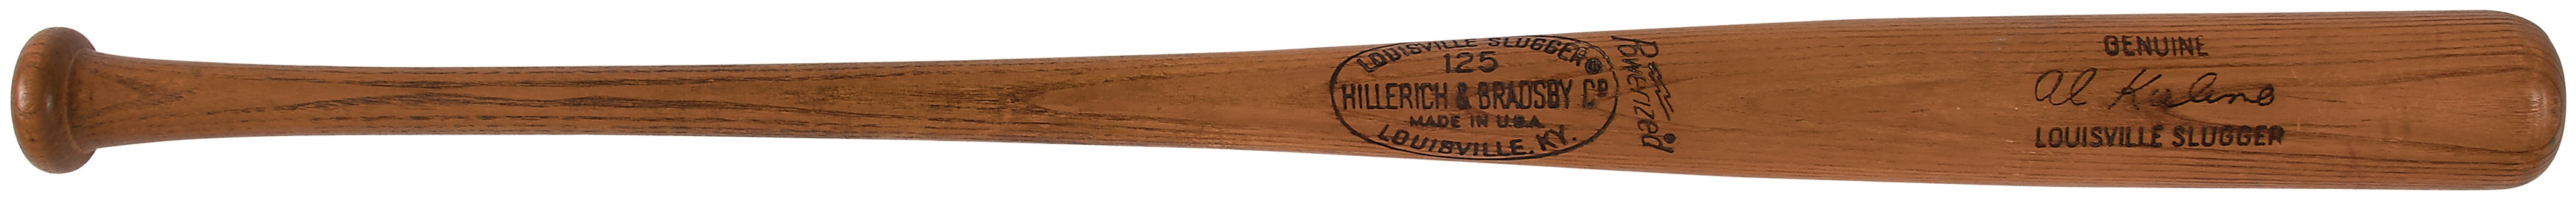 1973-74 Al Kaline Game Used Bat